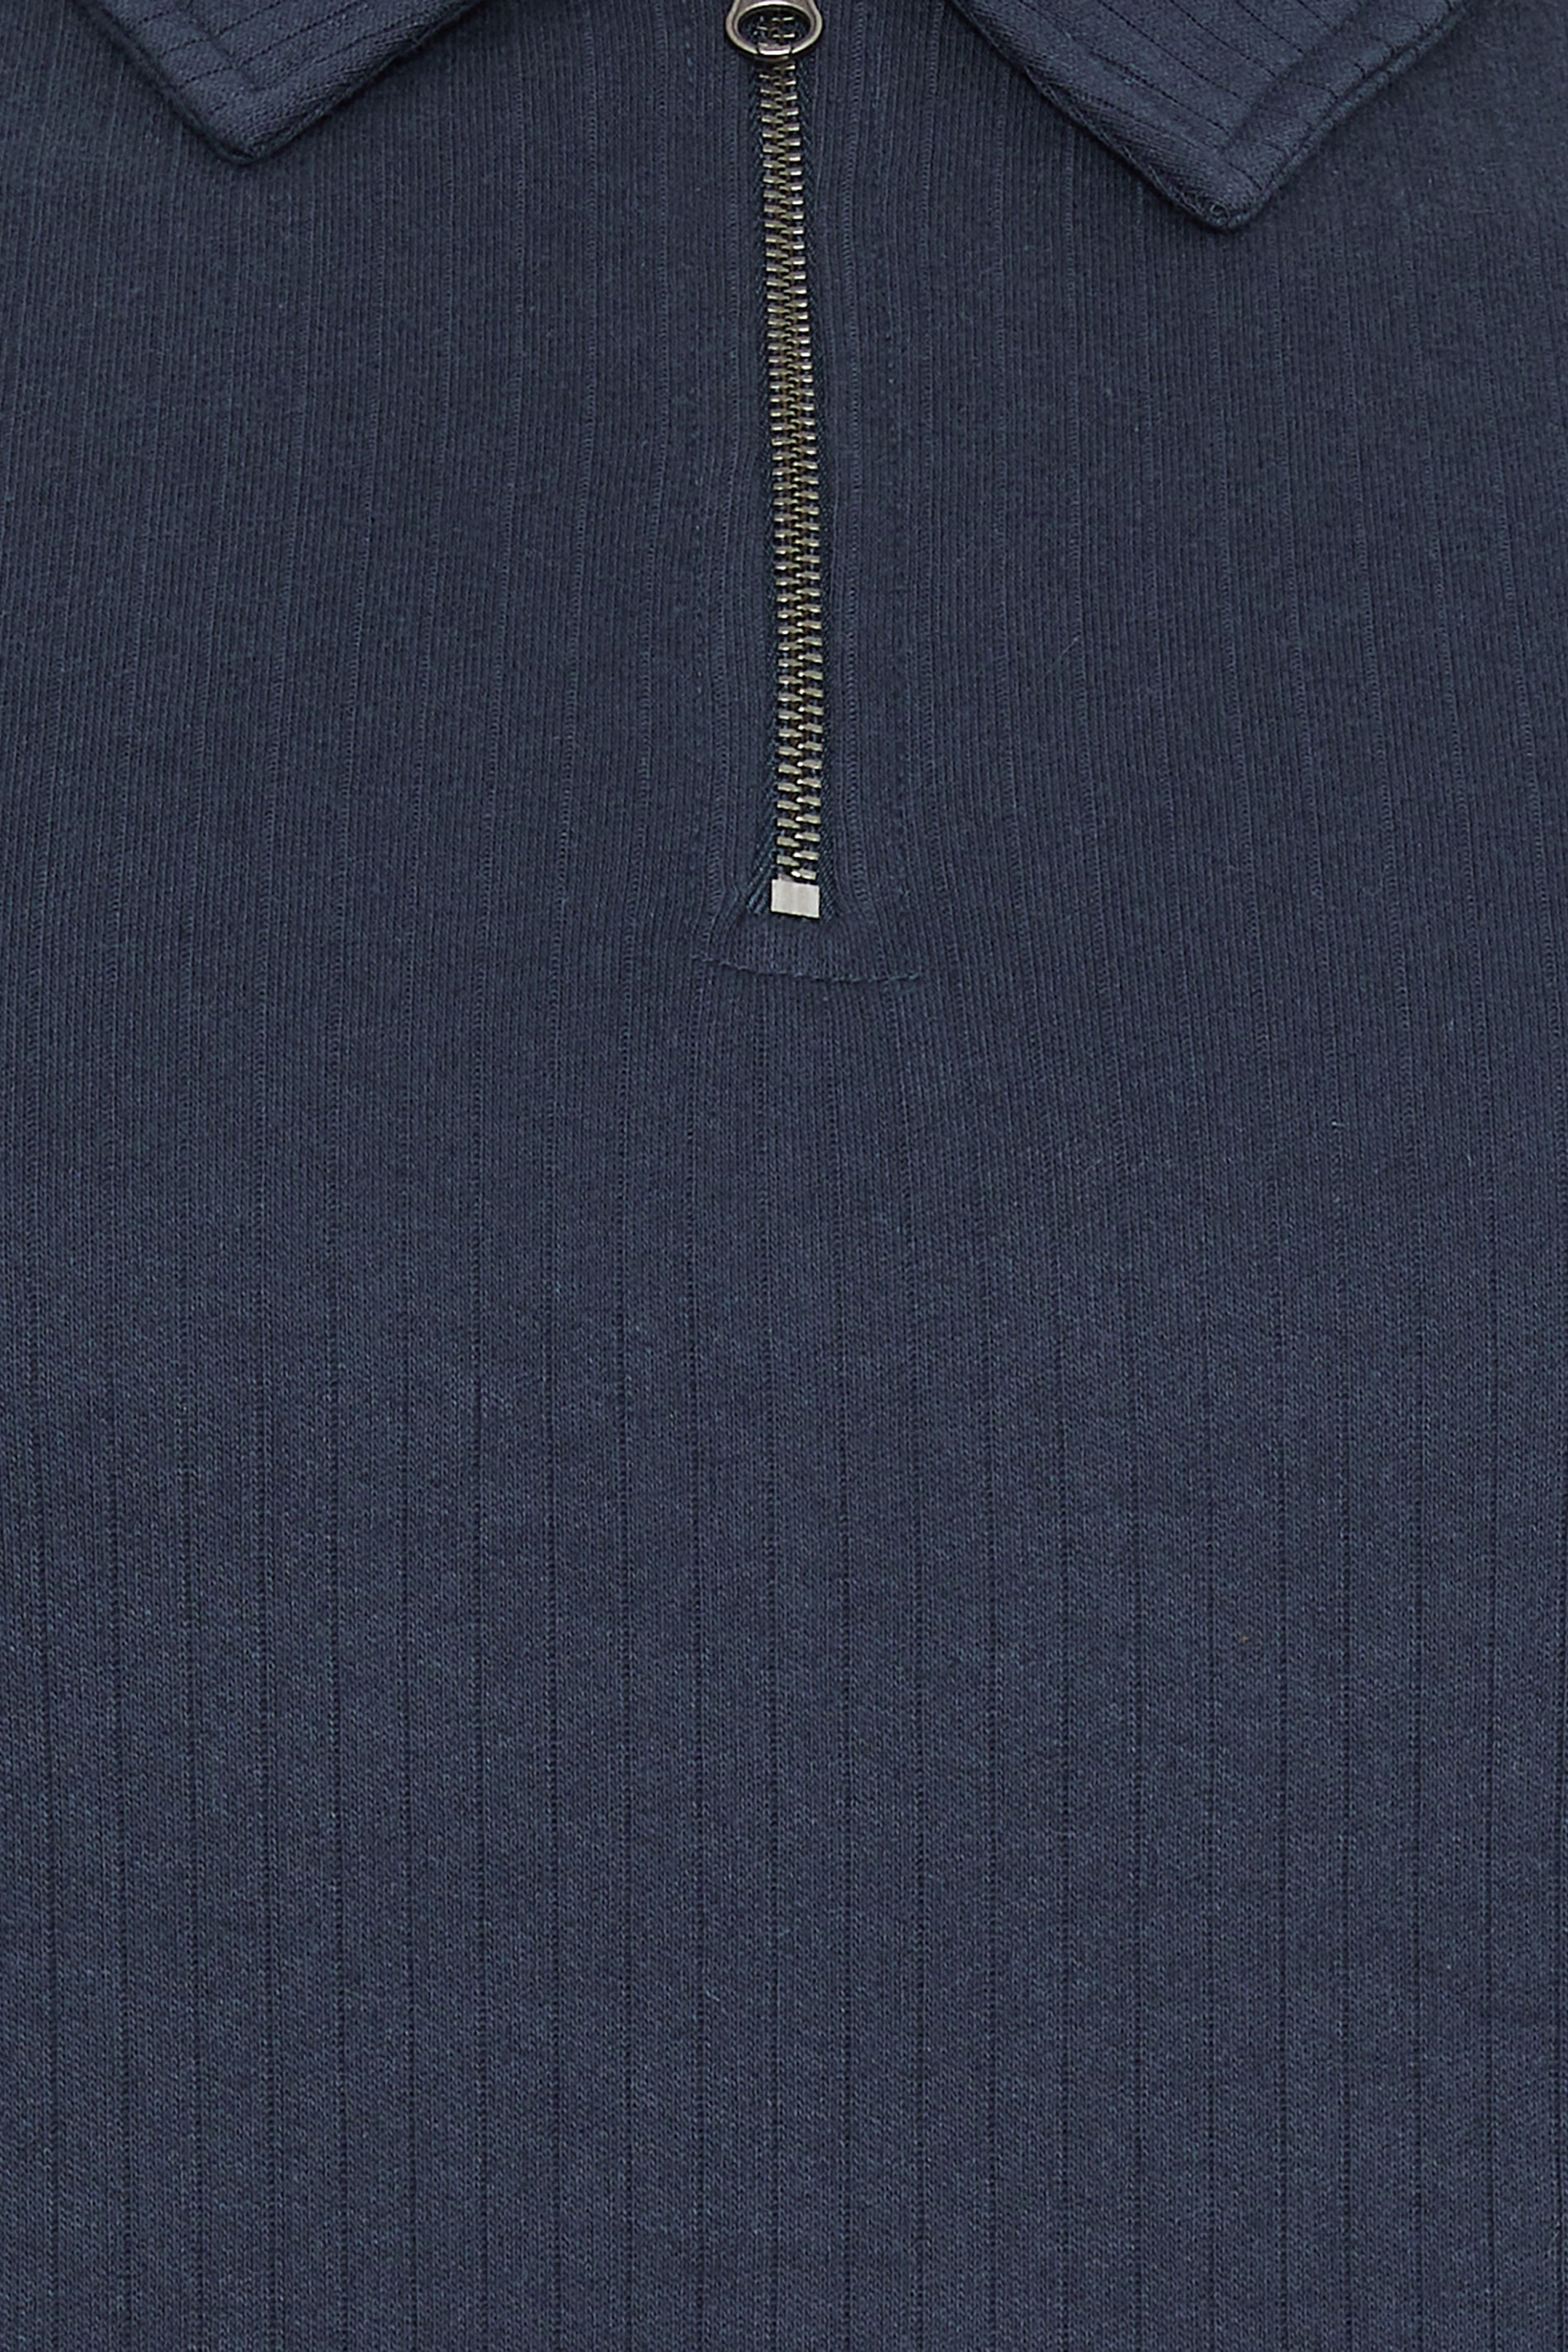 BadRhino Big & Tall Navy Blue Jacquard Zip Neck Polo Shirt | BadRhino 2